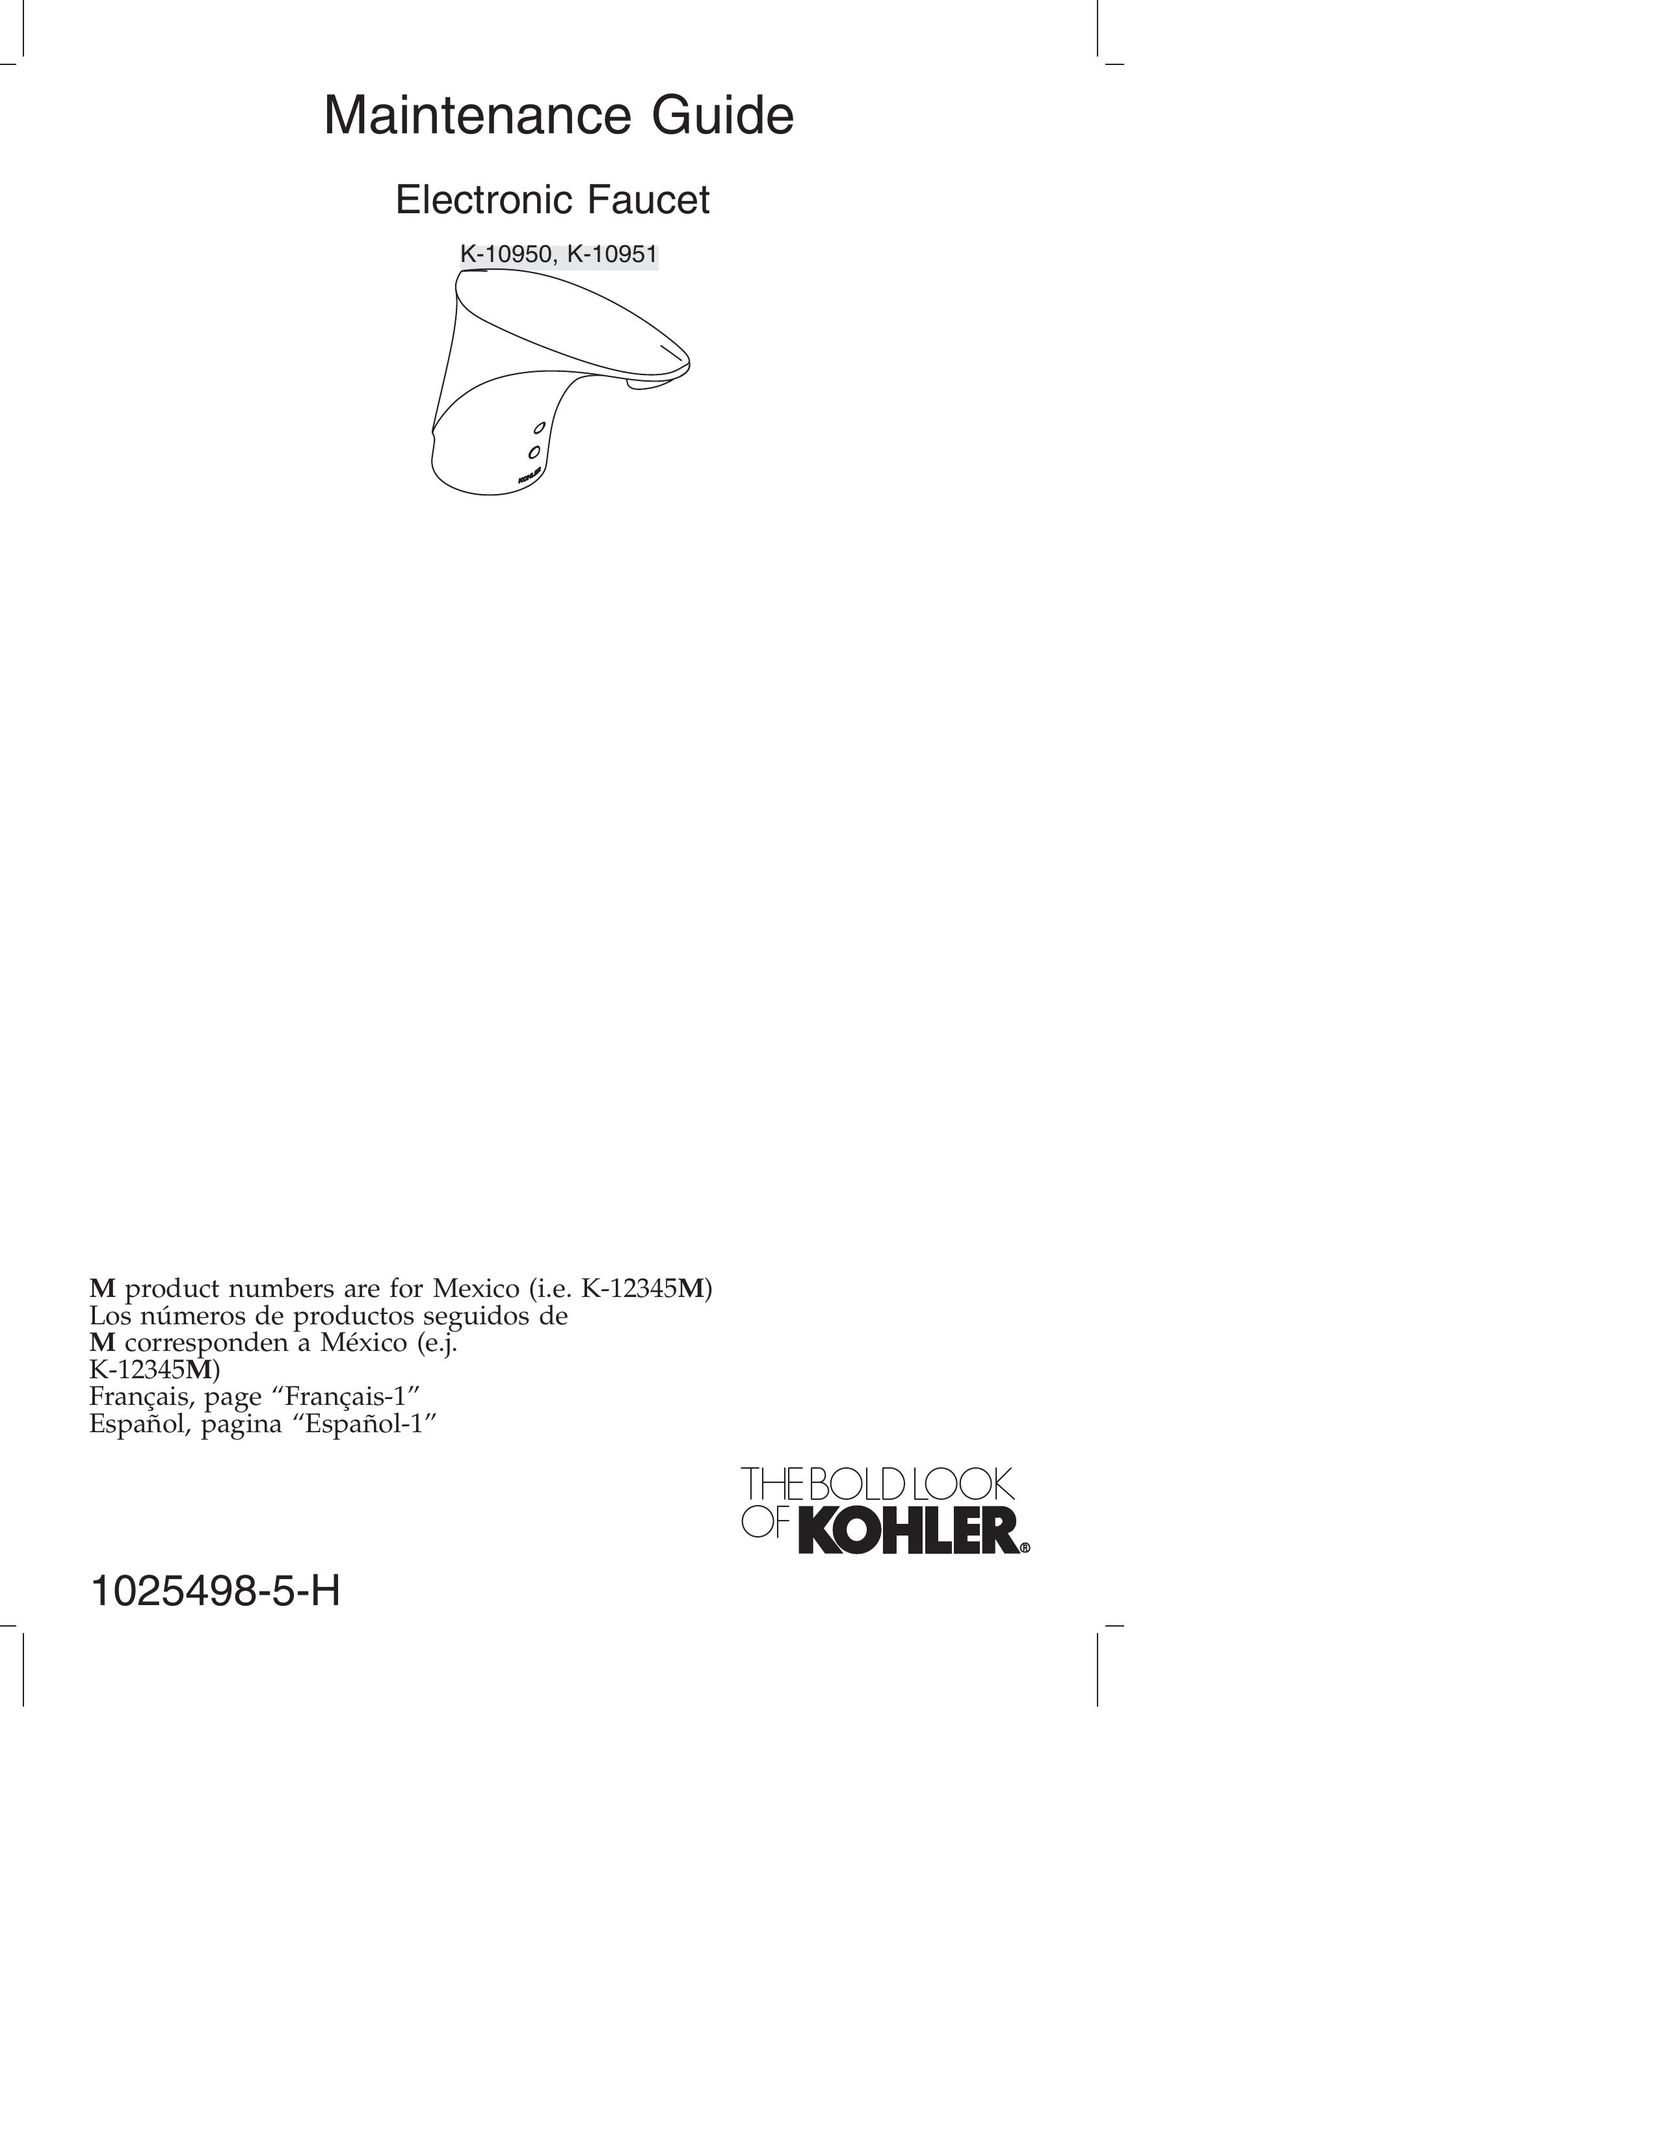 Kohler k-10950 Plumbing Product User Manual